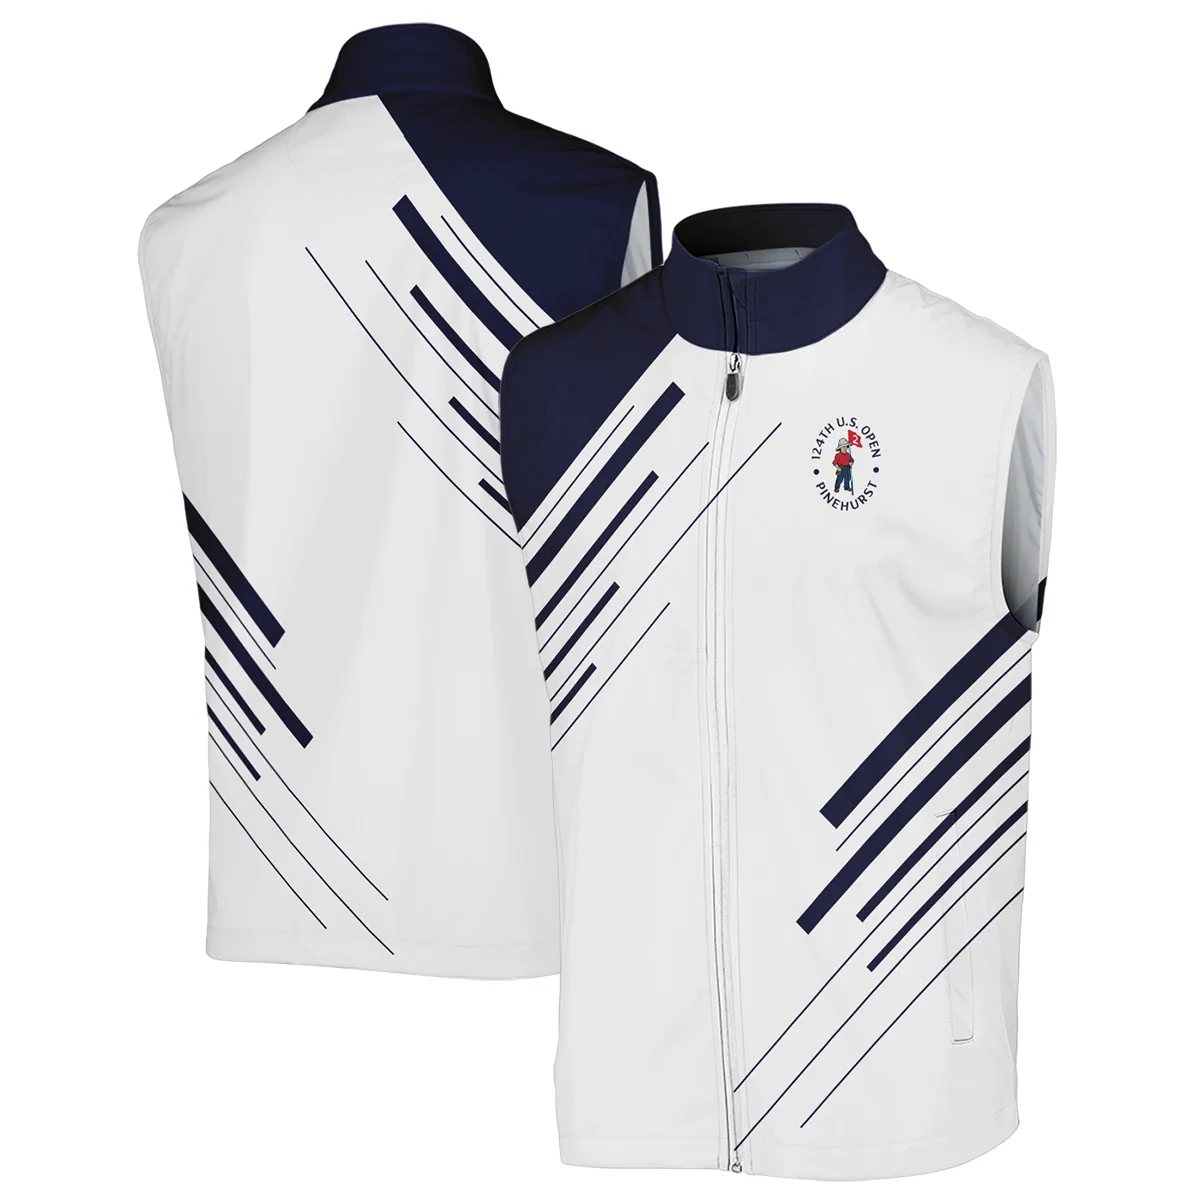 Titleist 124th U.S. Open Pinehurst Golf Hoodie Shirt Striped Pattern Dark Blue White All Over Print Hoodie Shirt